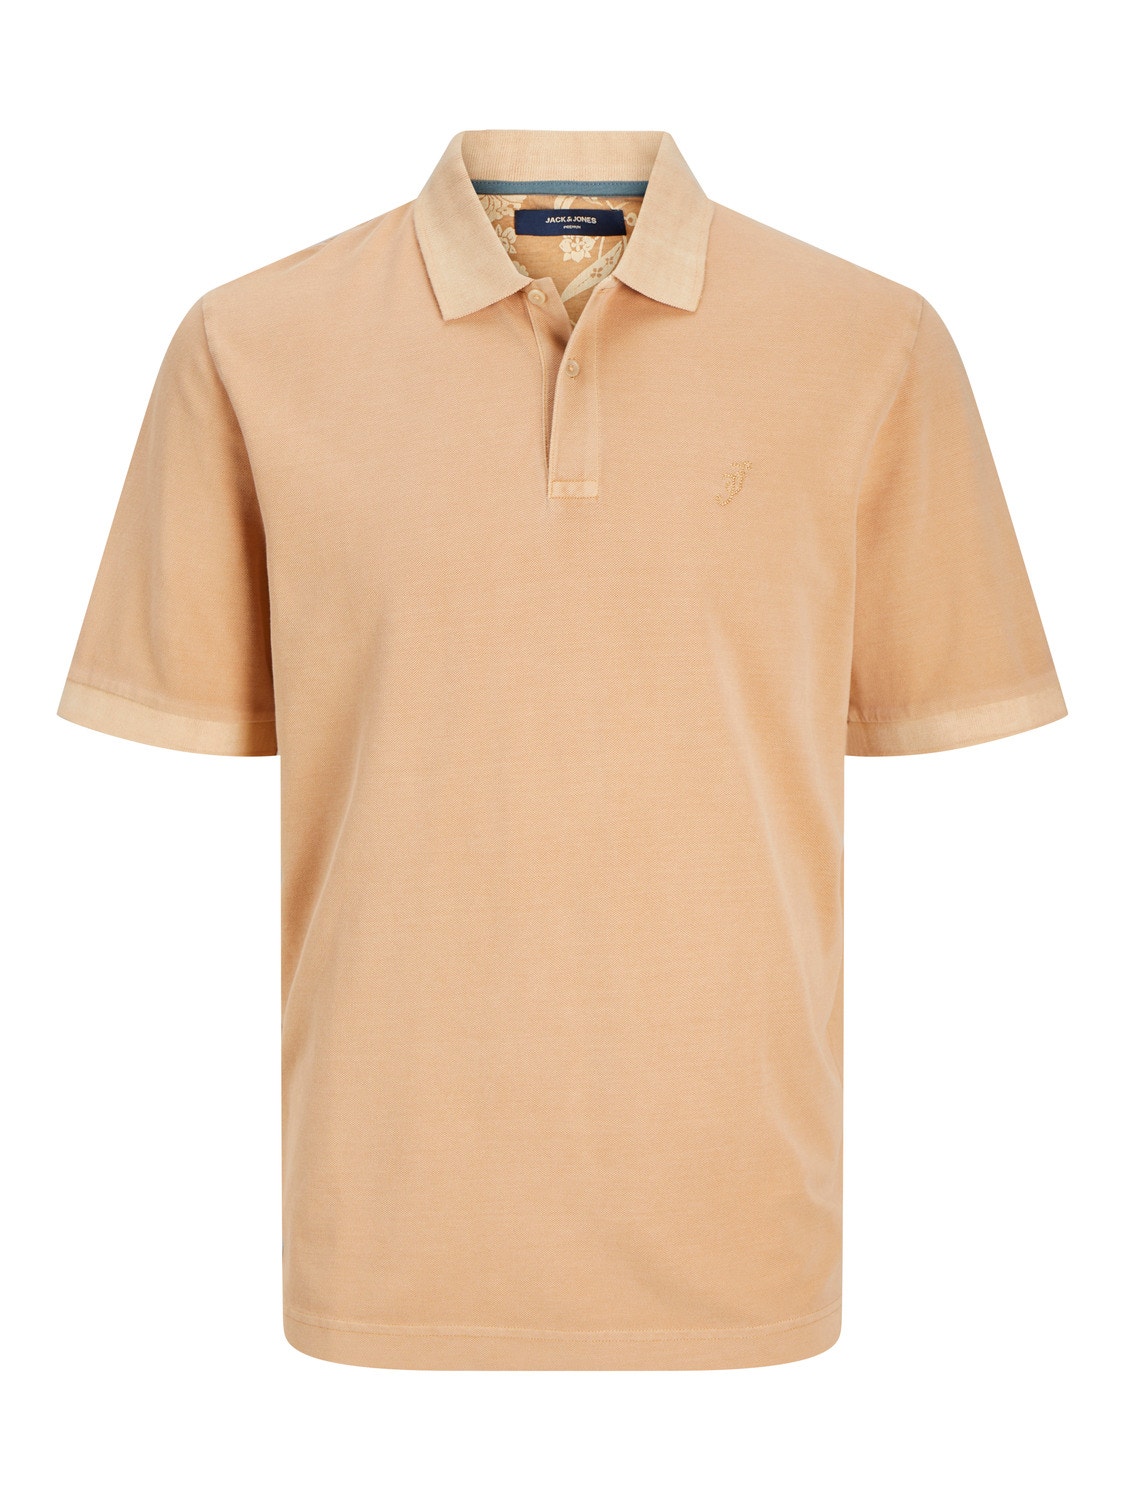 Jack & Jones Plain Polo T-shirt -Sand - 12257315